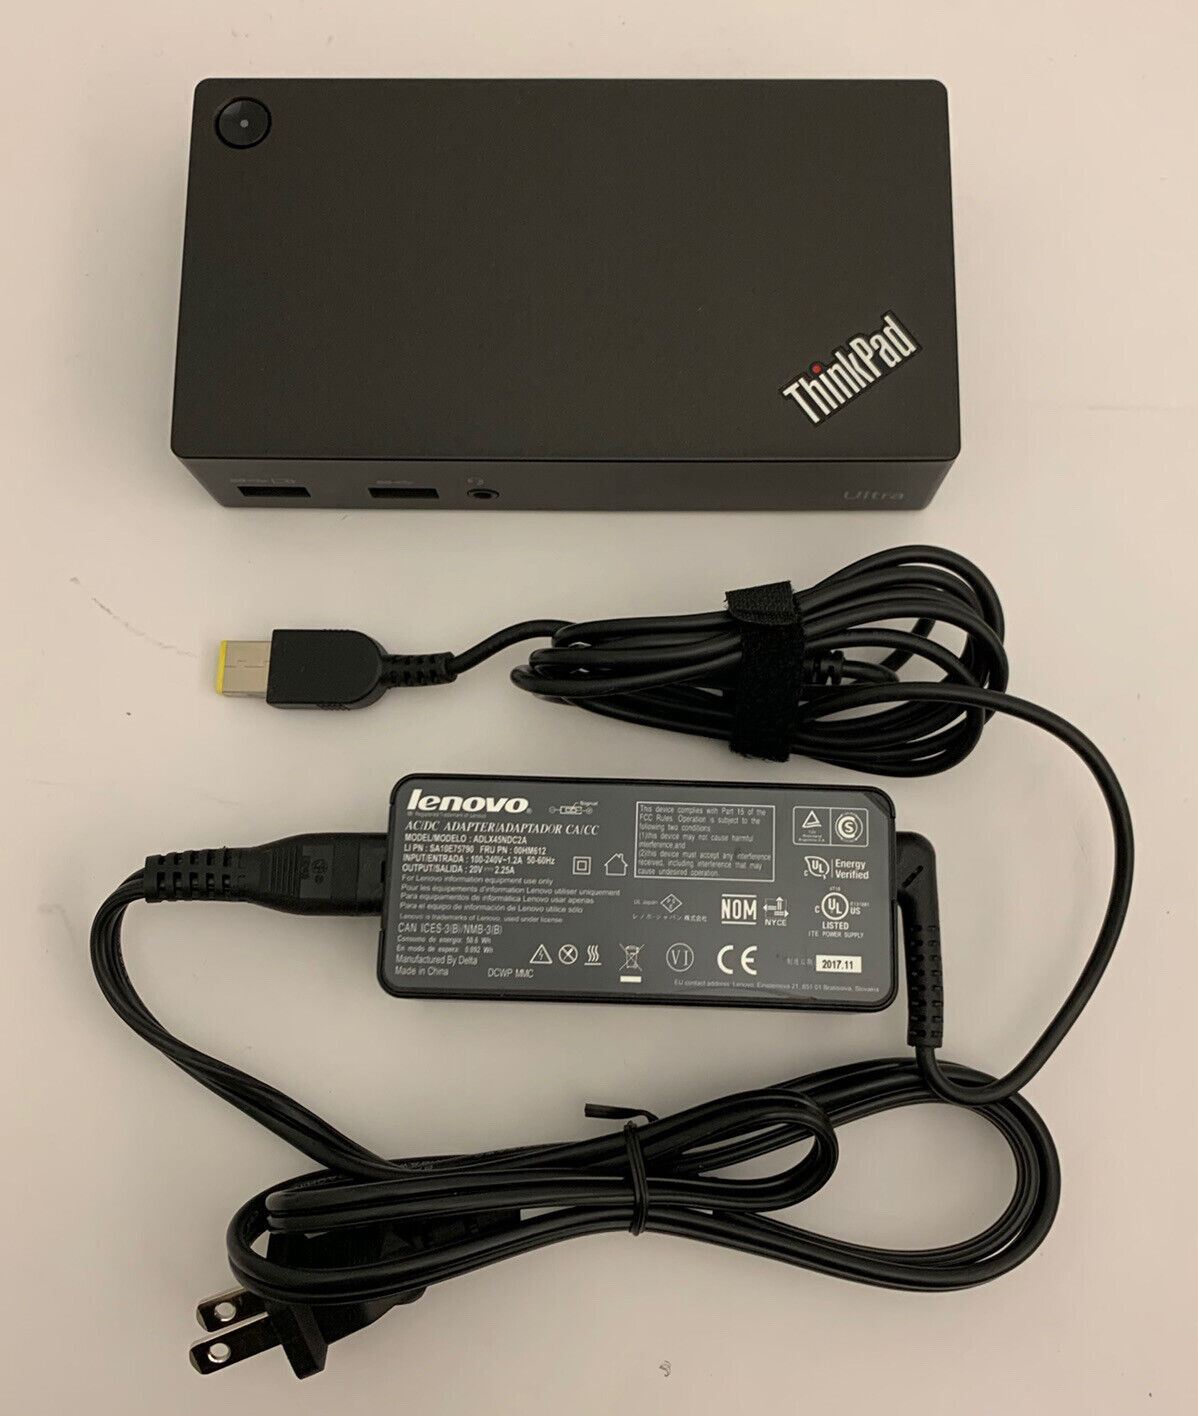 Lenovo ThinkPad DK1523 DisplayLink USB 3.0 Ultra Docking Station with AC Adapter